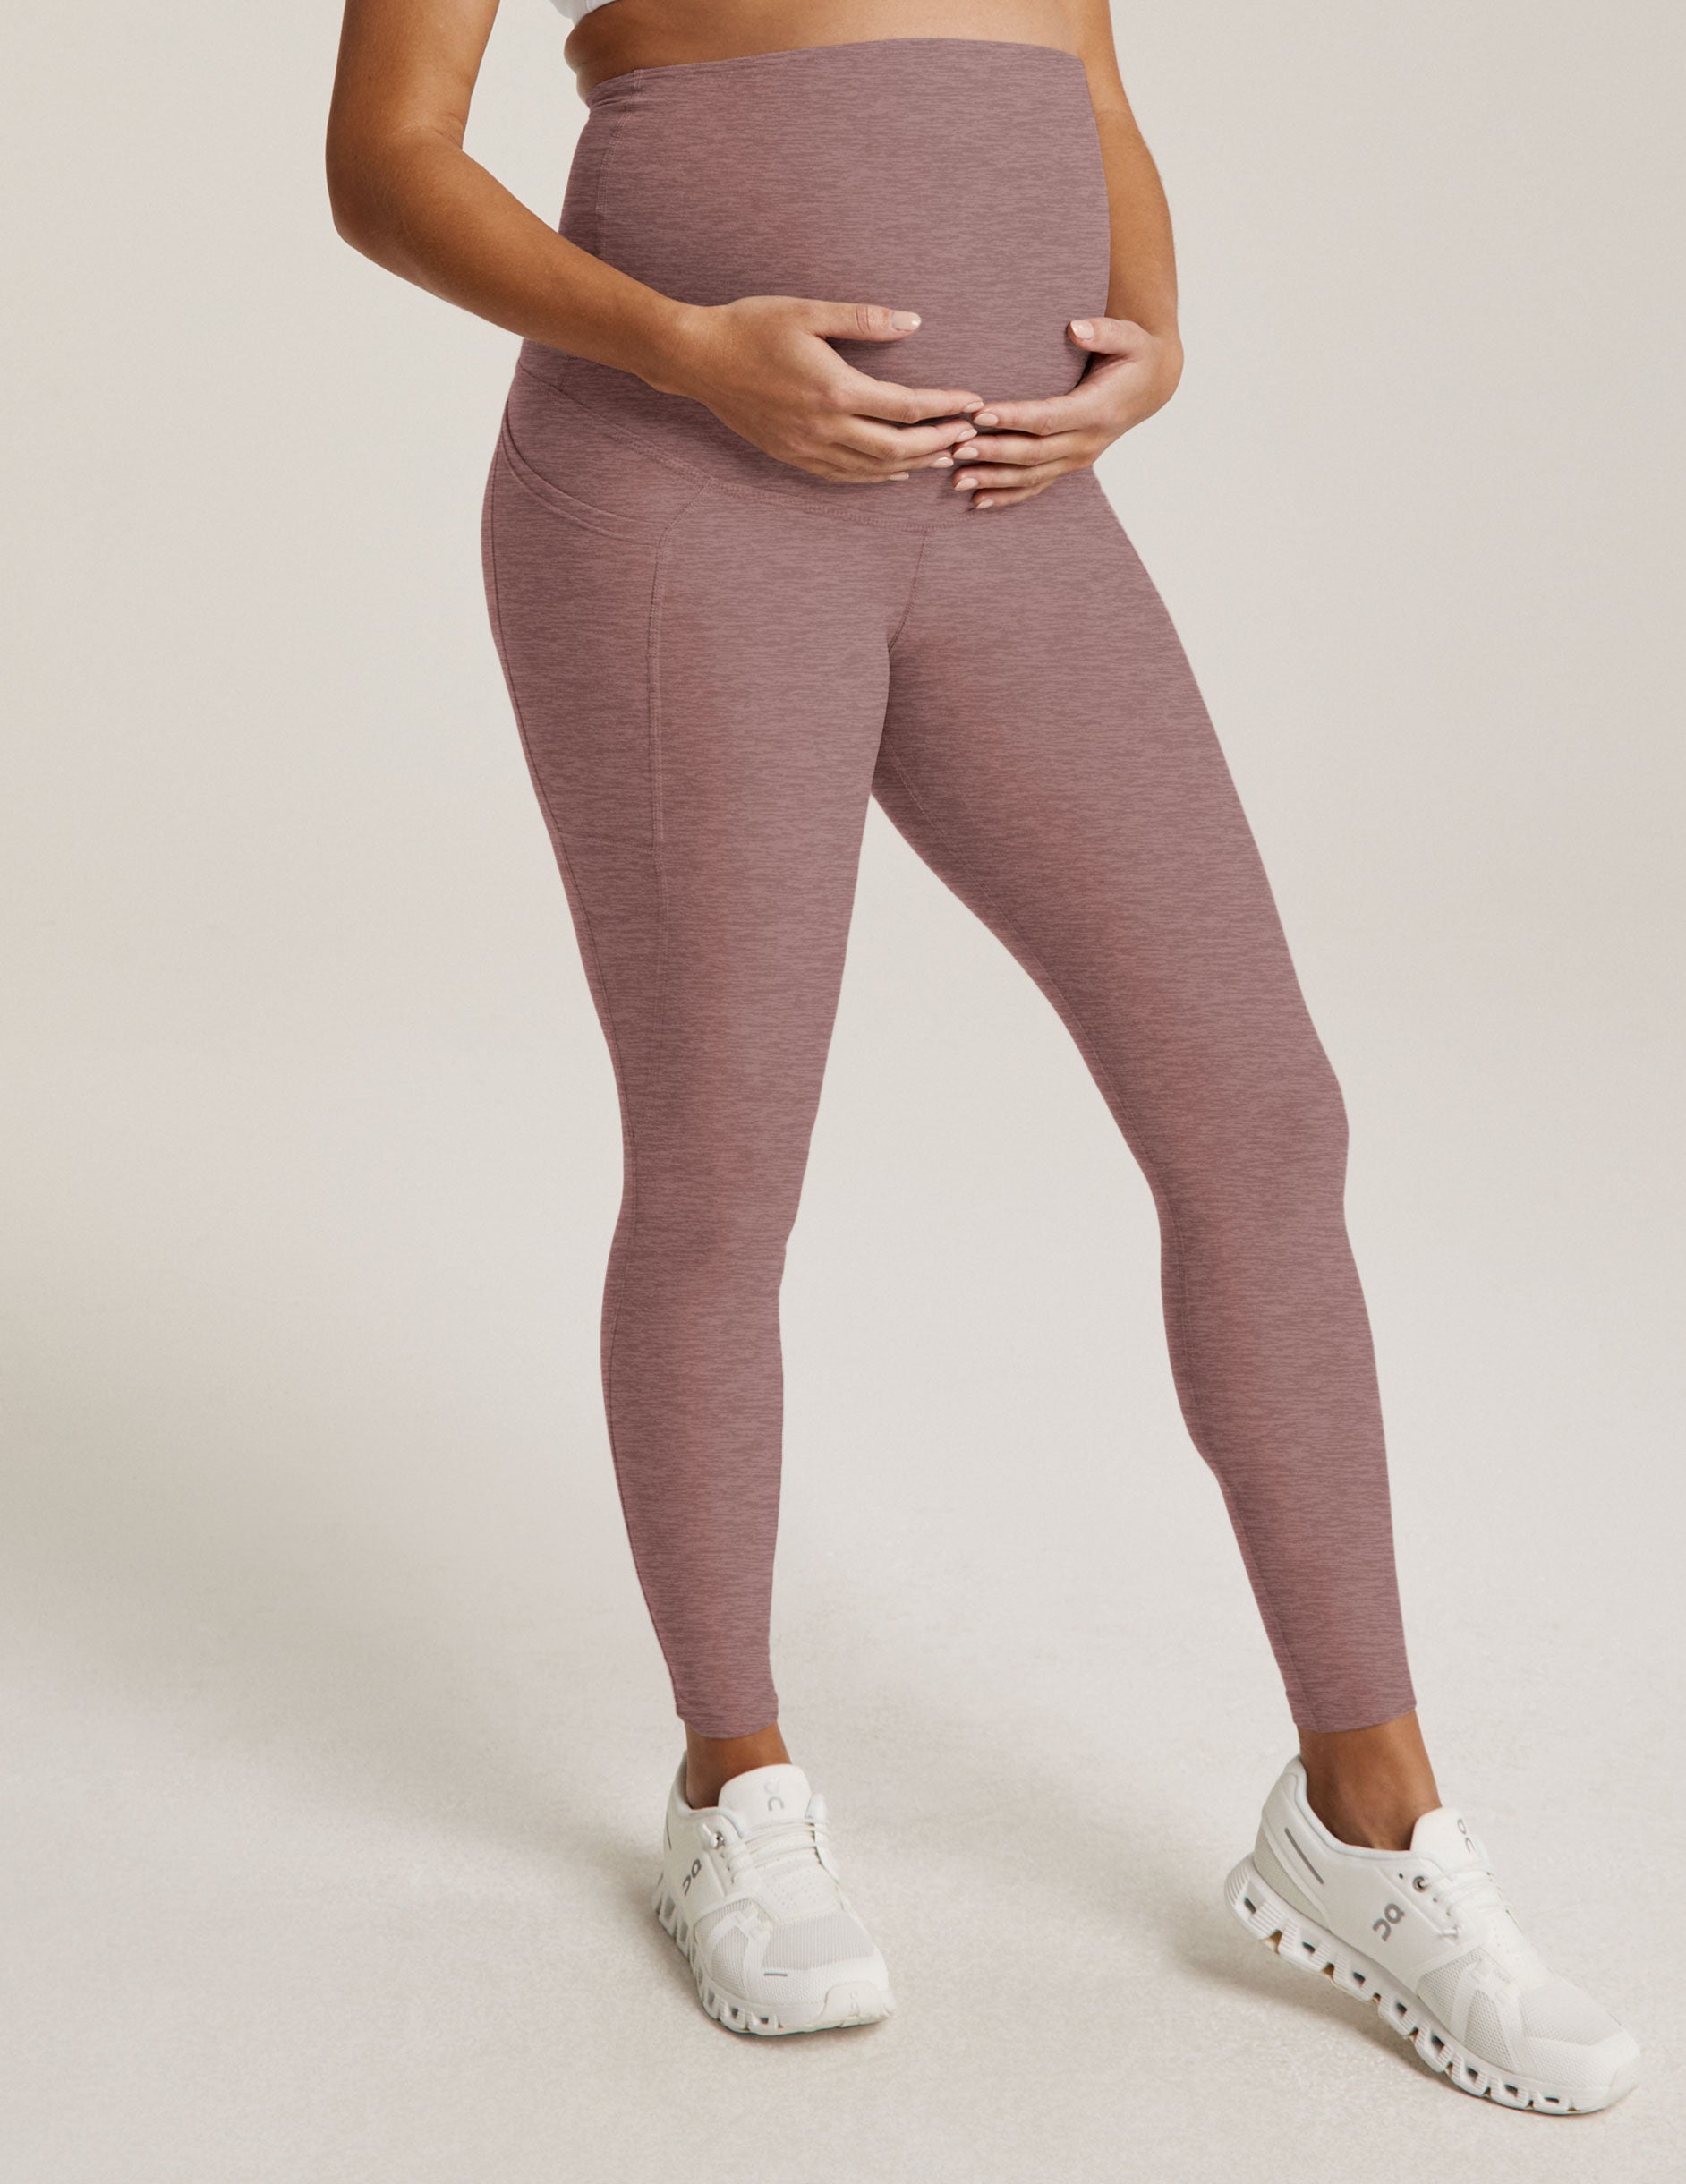 SWEATY BETTY Power Pocket Workout Leggings, Size Xx-Large in Pink